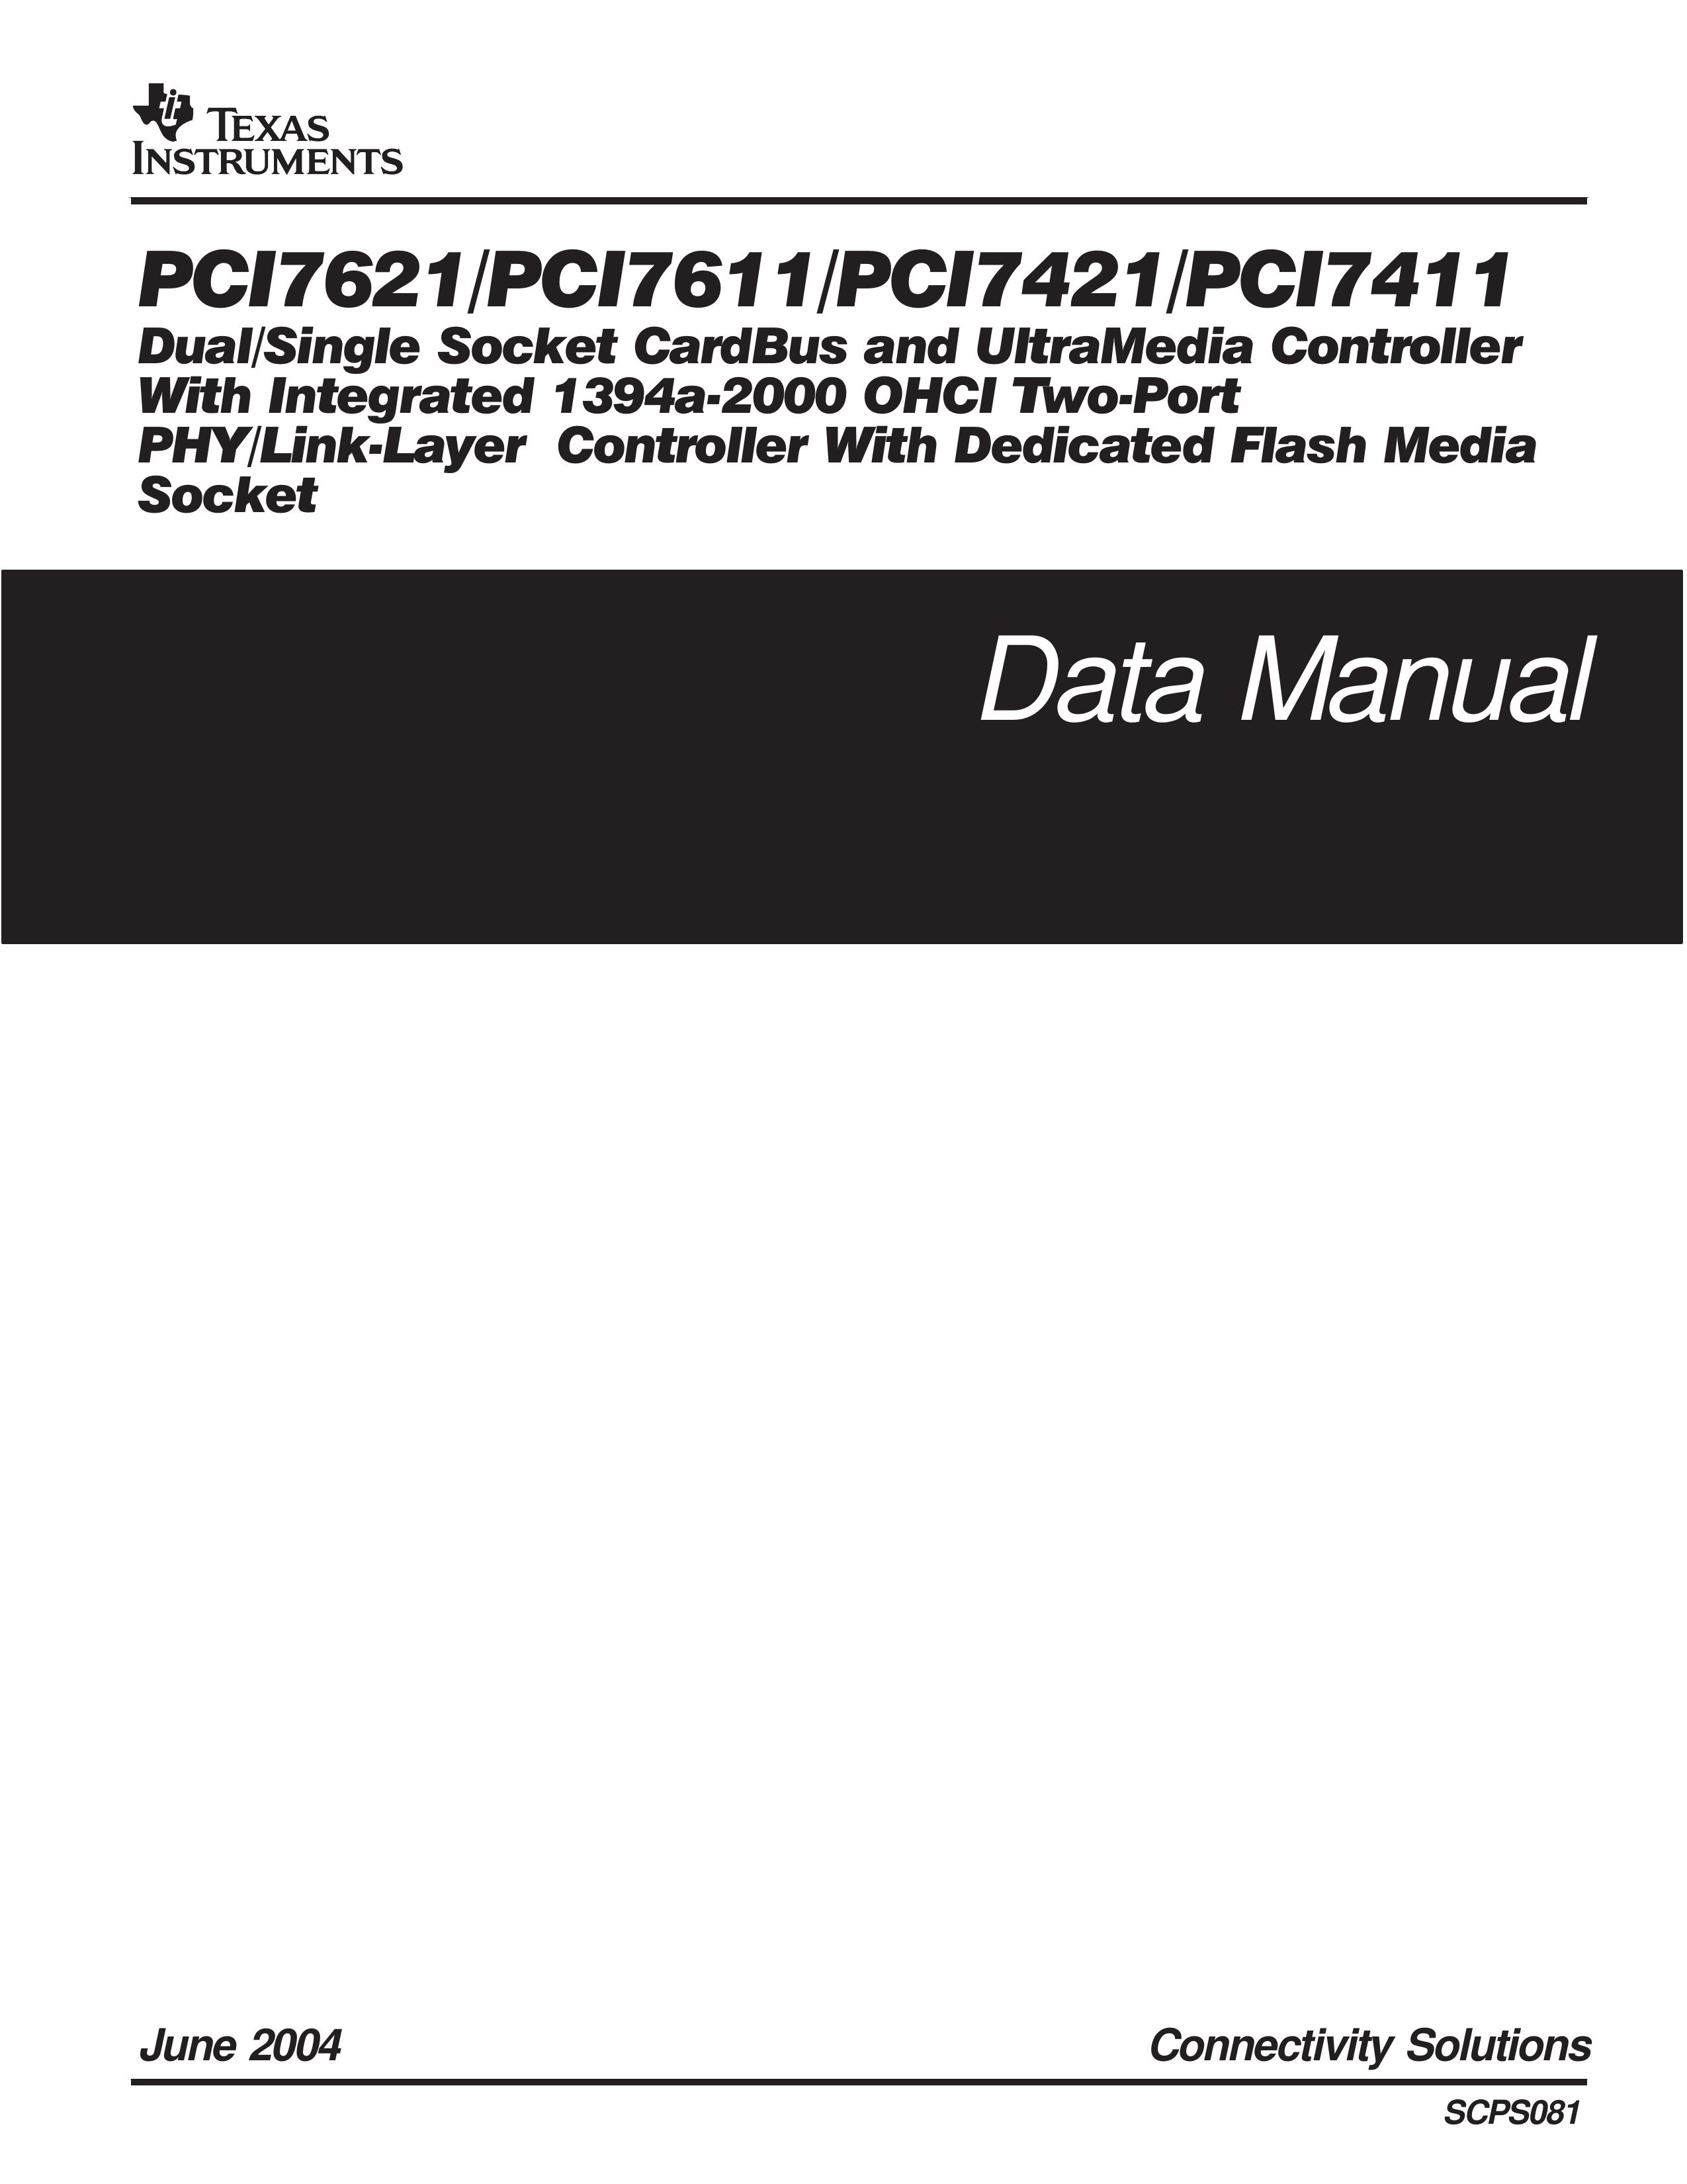 Texas Instruments PCI7421 Camera Accessories User Manual